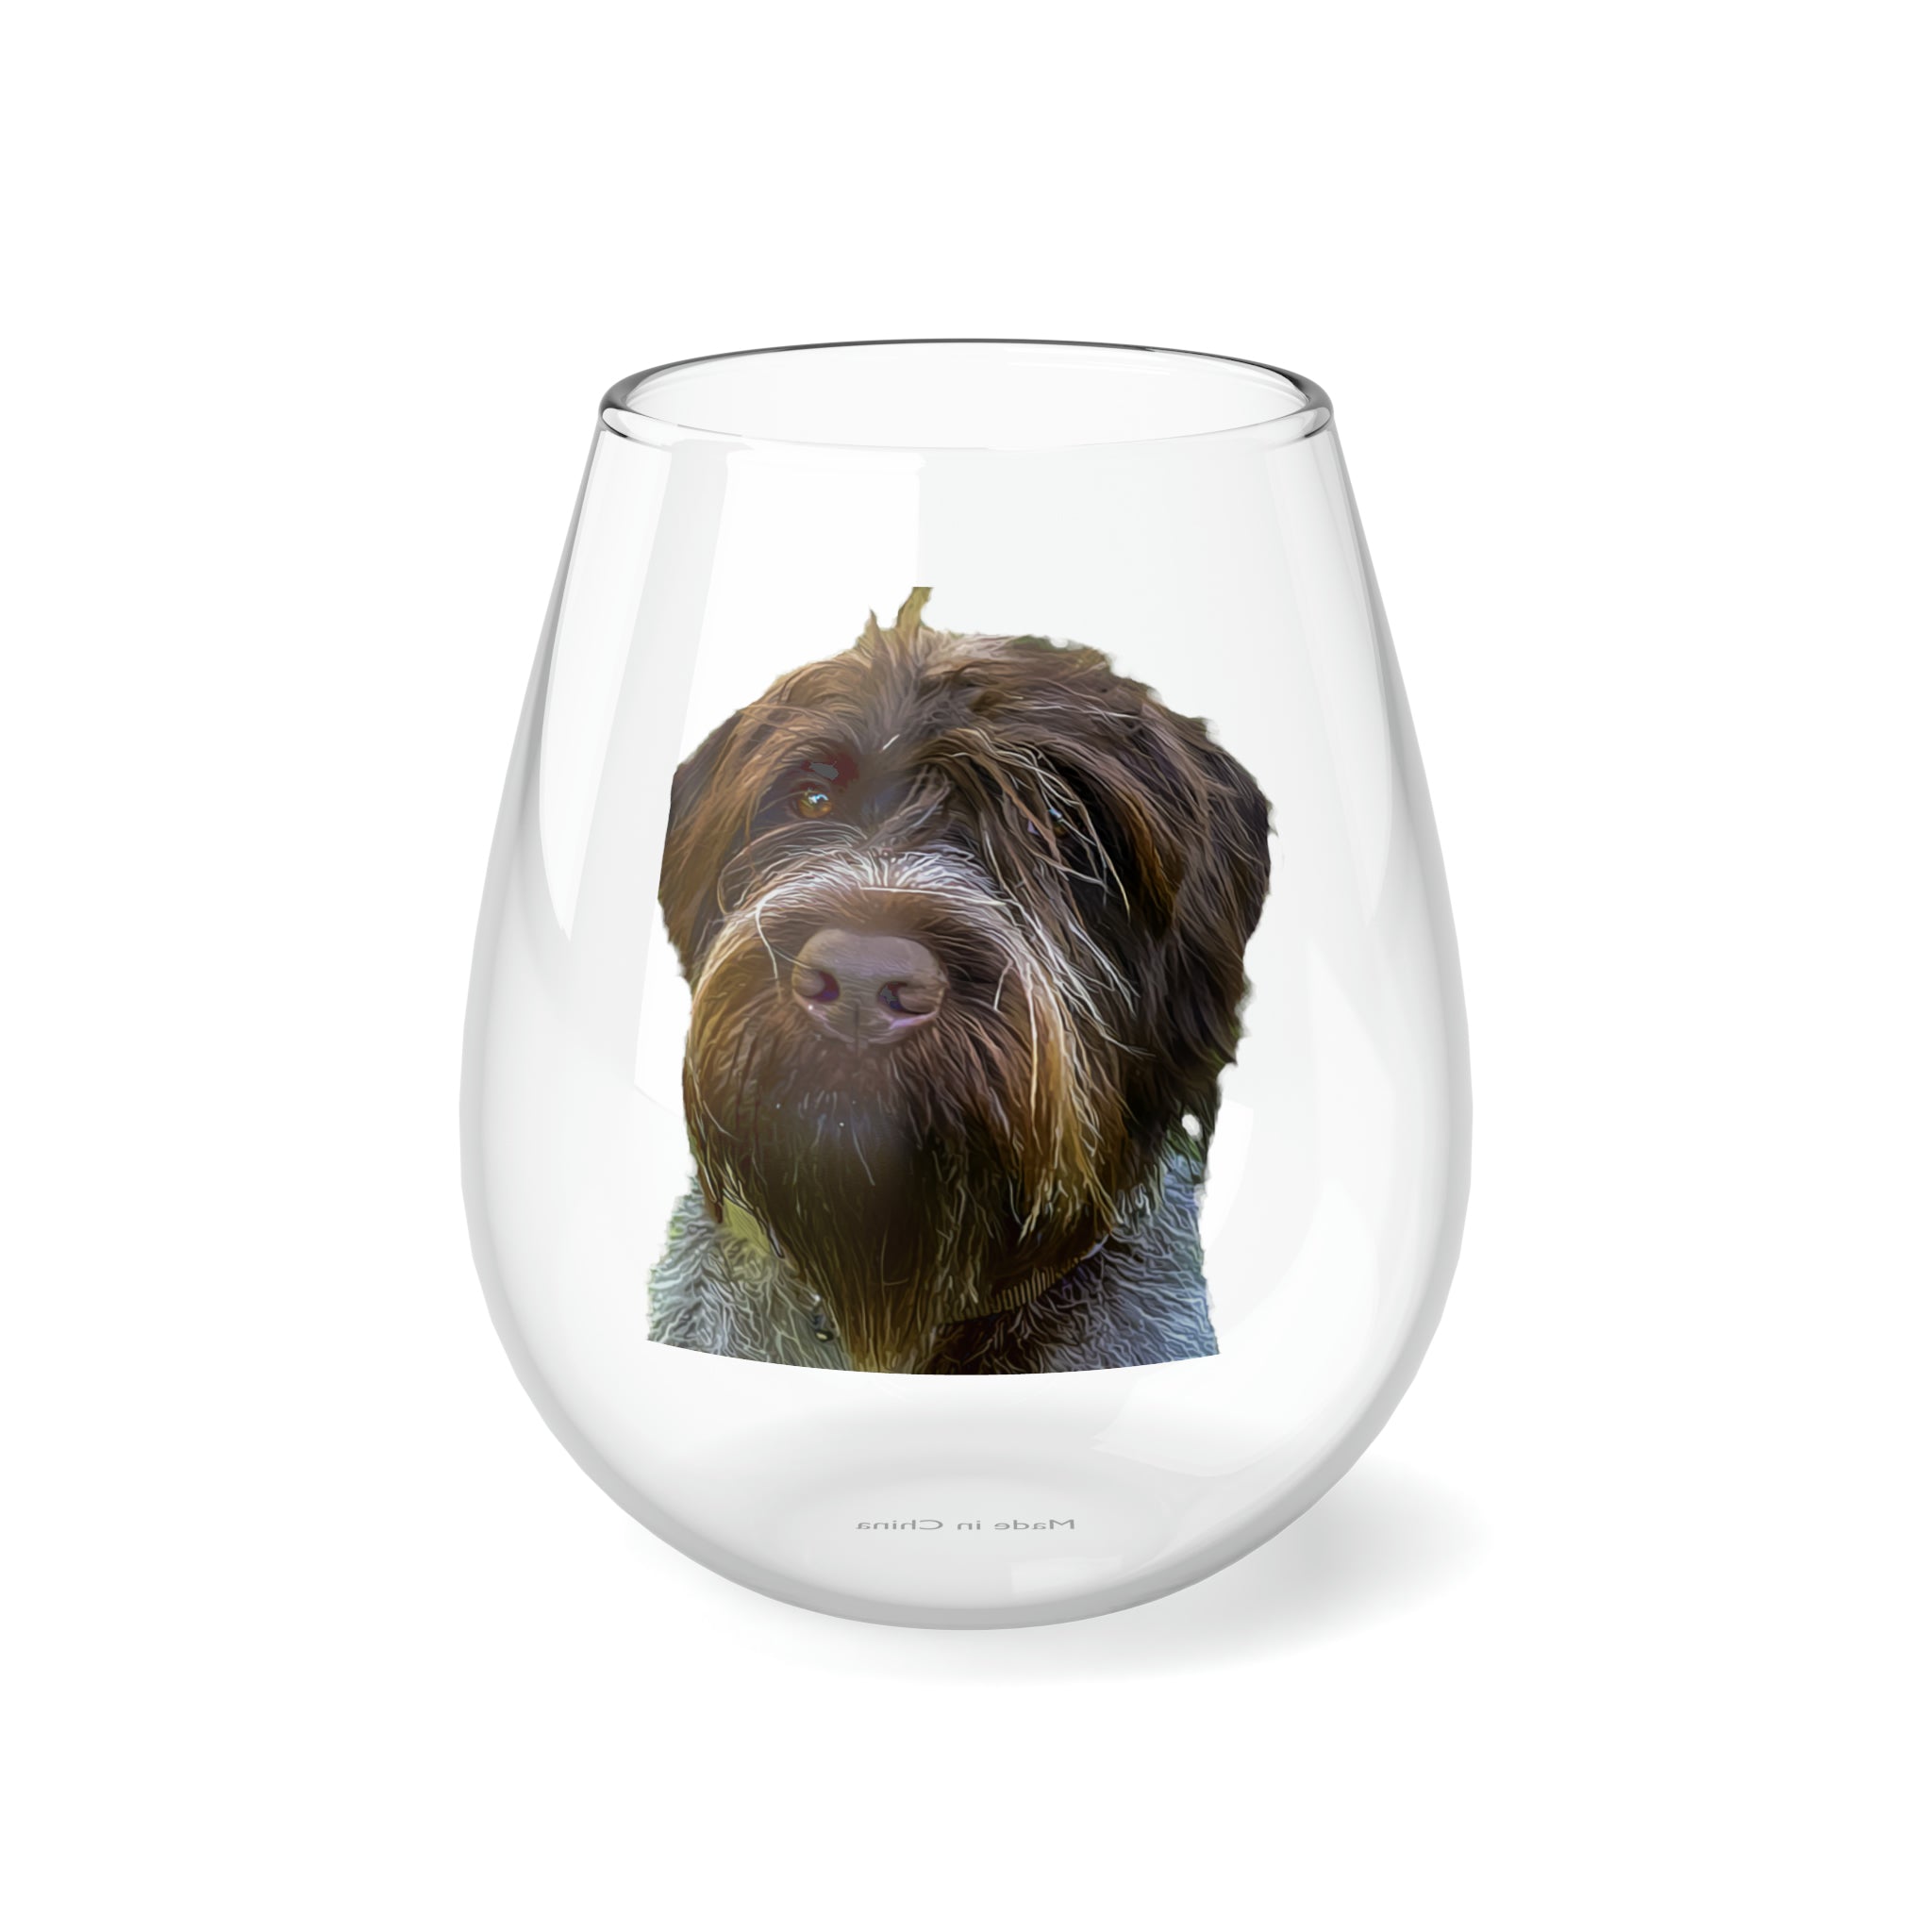 CHRIS I Stemless Wine Glass, 11.75oz